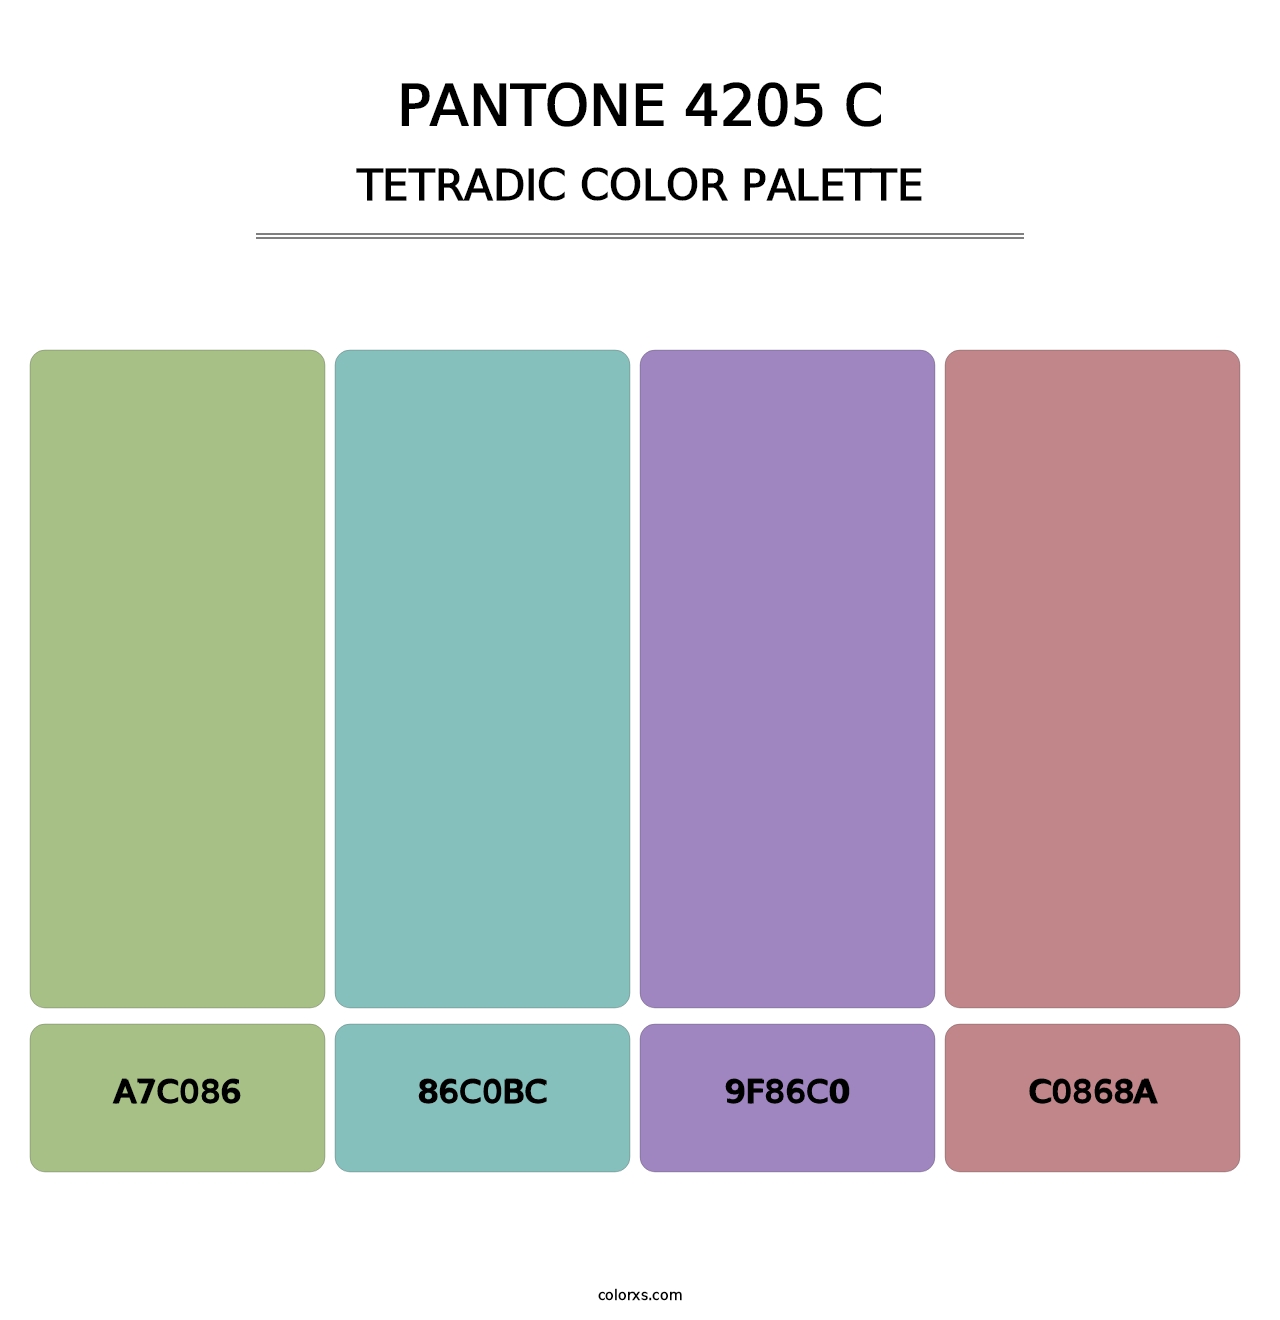 PANTONE 4205 C - Tetradic Color Palette